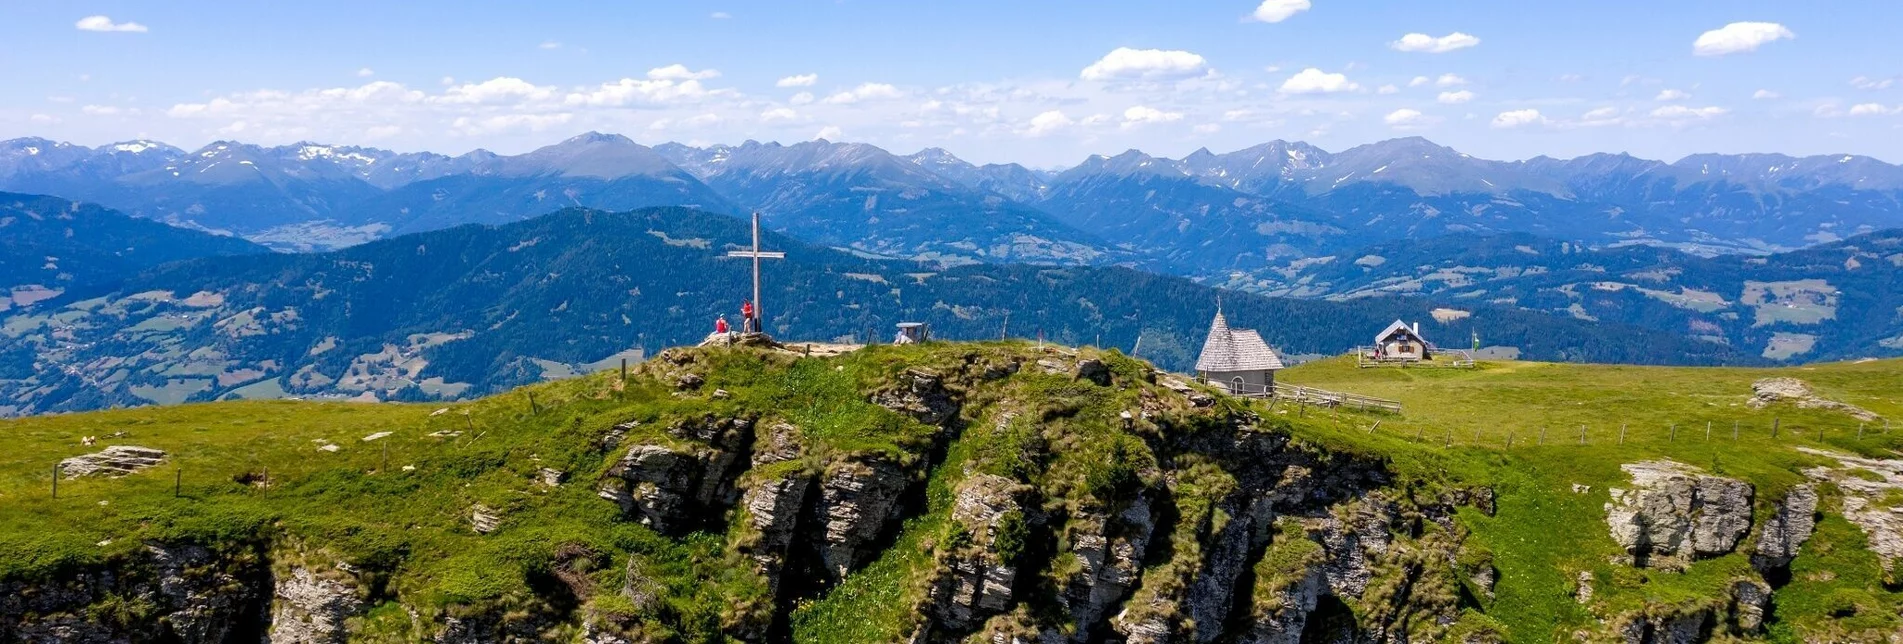 Hiking route St. Lorenzen - Frauenalpe - Touren-Impression #1 | © Tourismusverband Region Murau